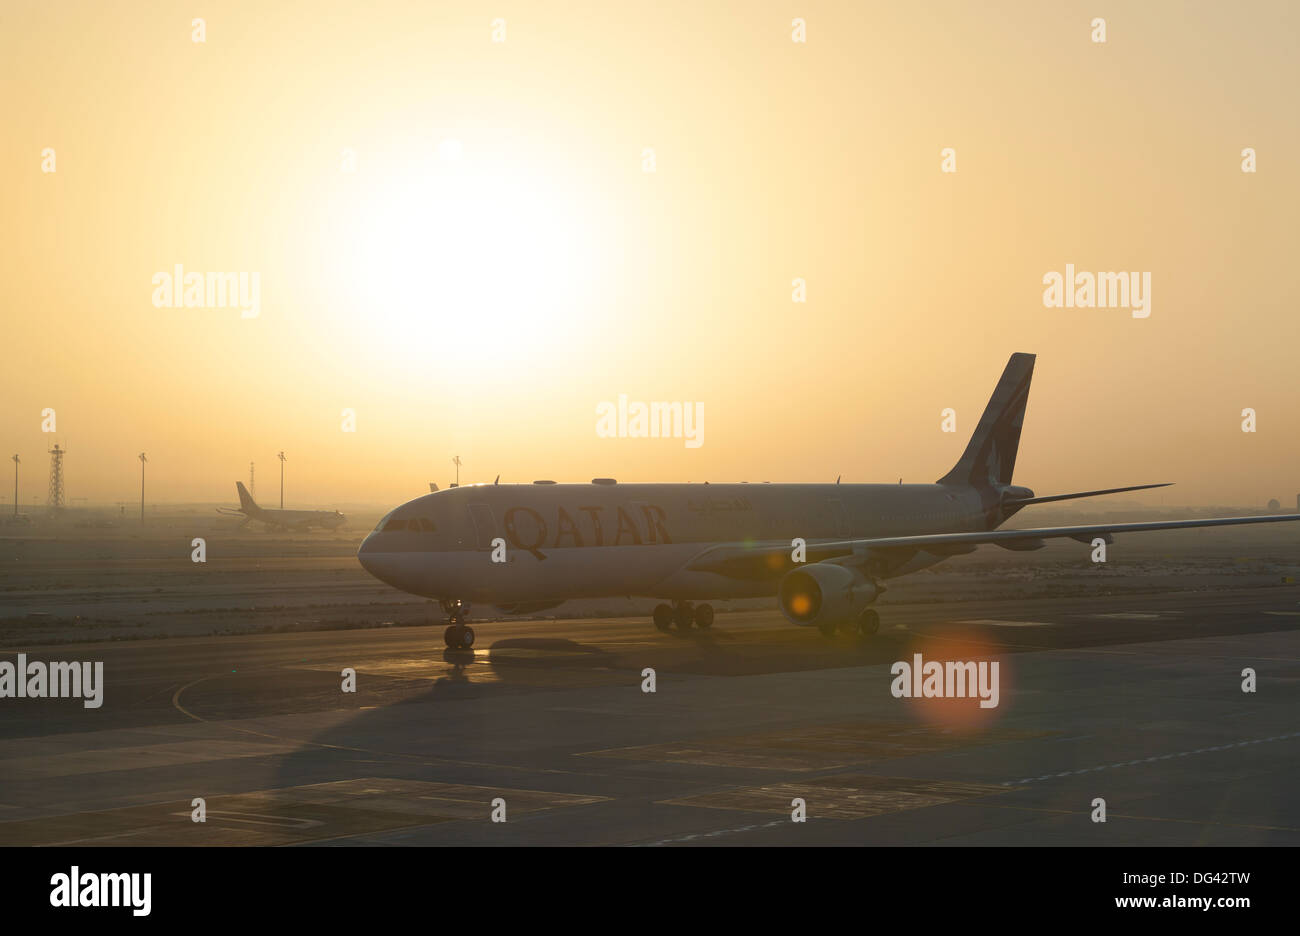 Qatar airways plane just landed at Doha airport, Qatar Stock Photo